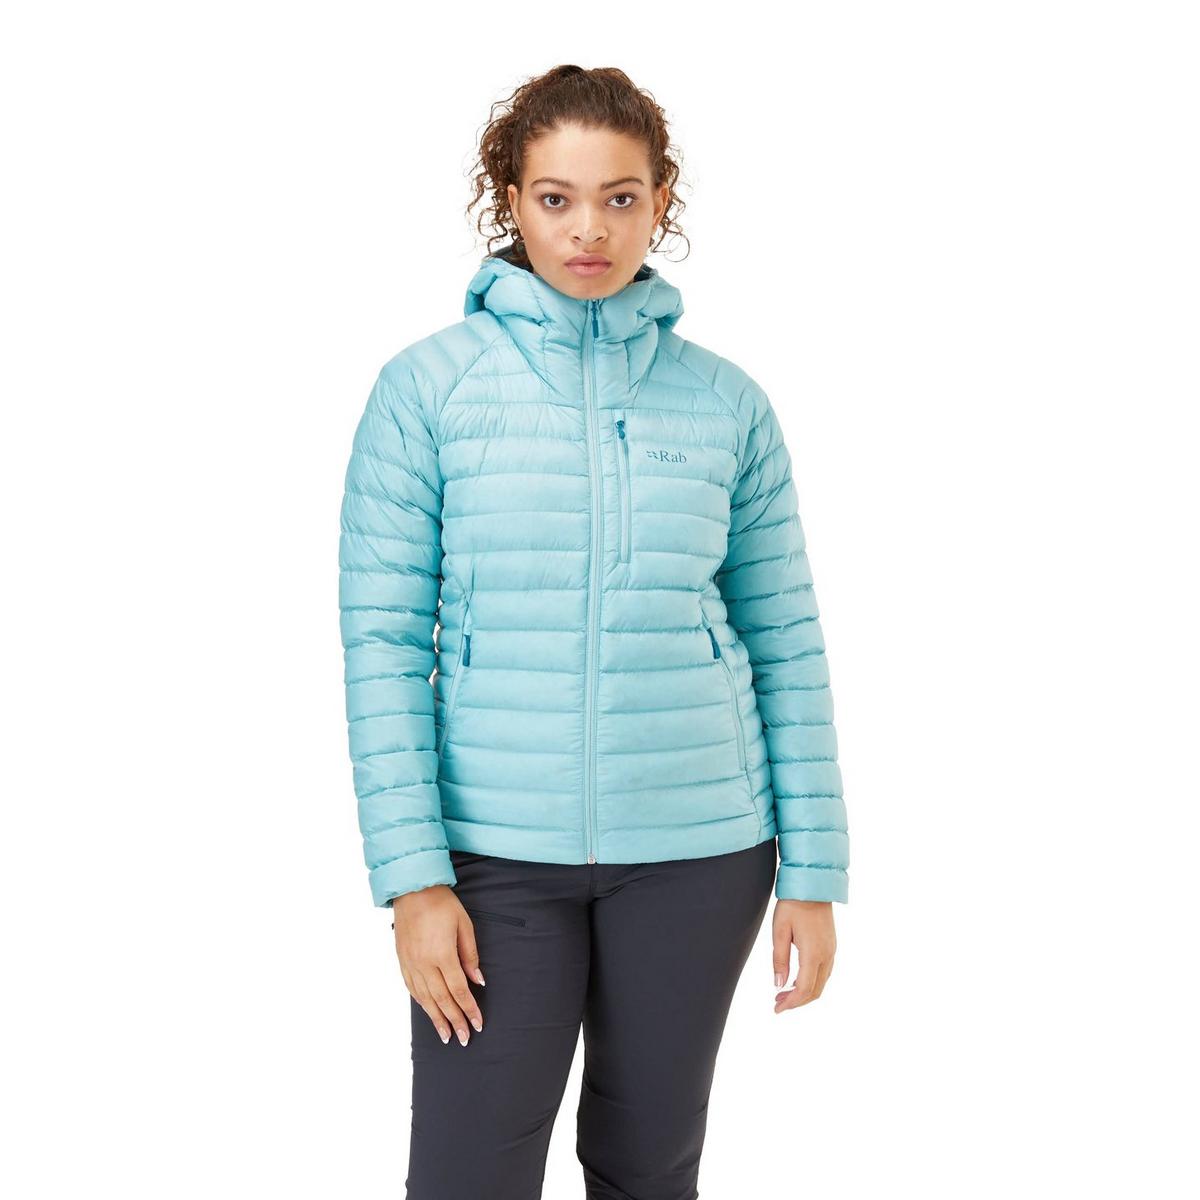 Rab Women's Microlight Alpine Jacket - Meltwater